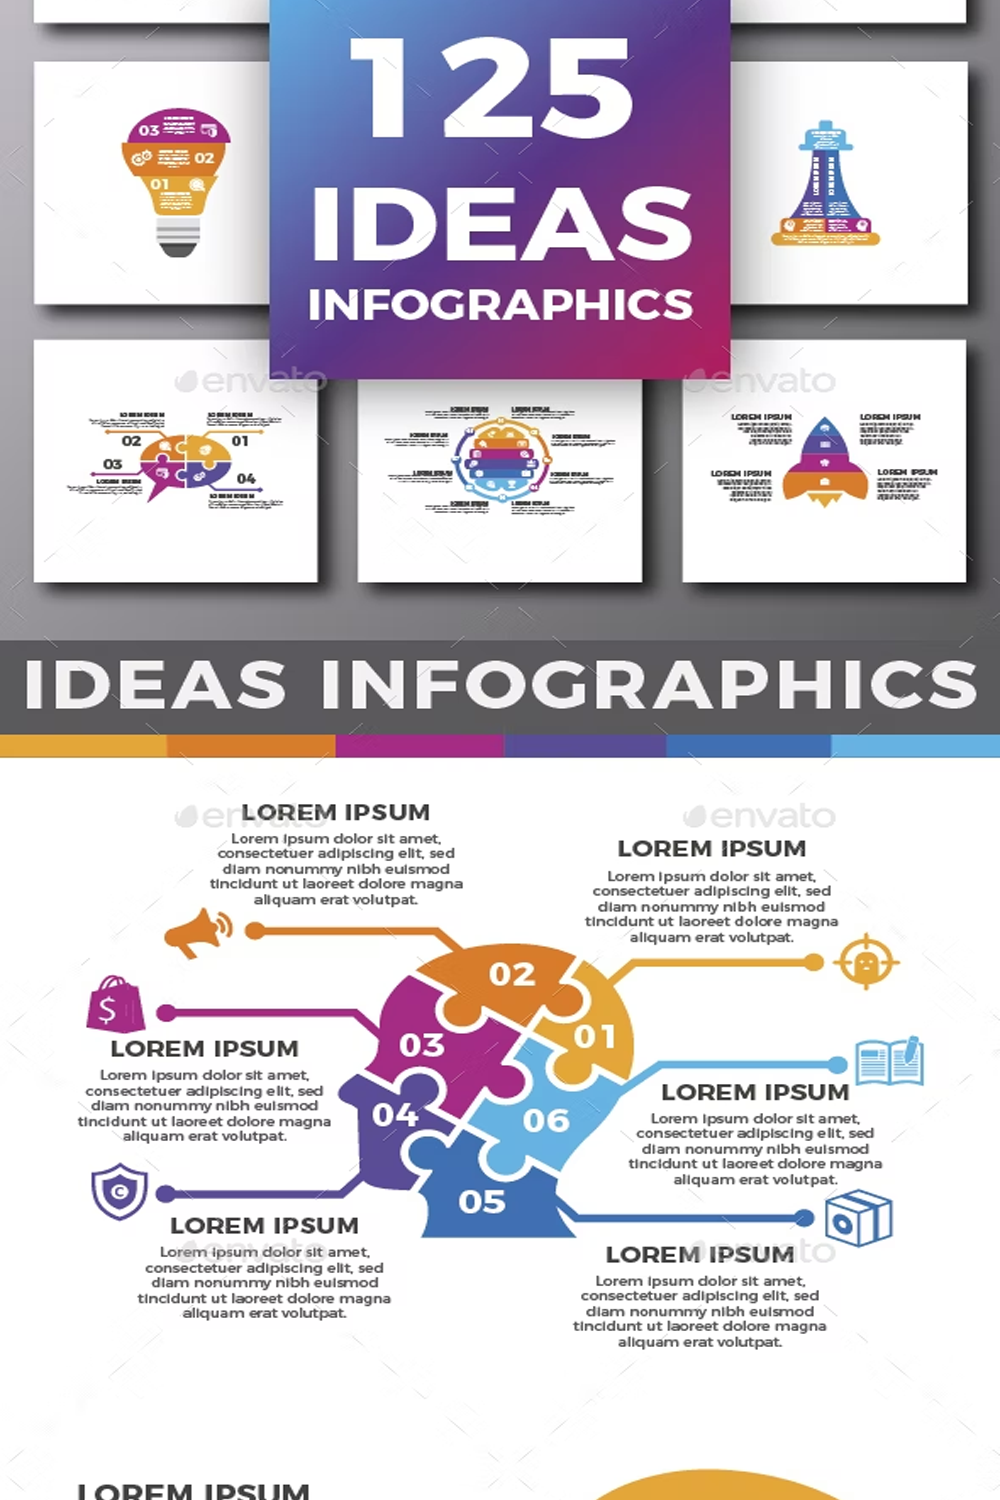 Illustrations 125 ideas infographics pinterest.